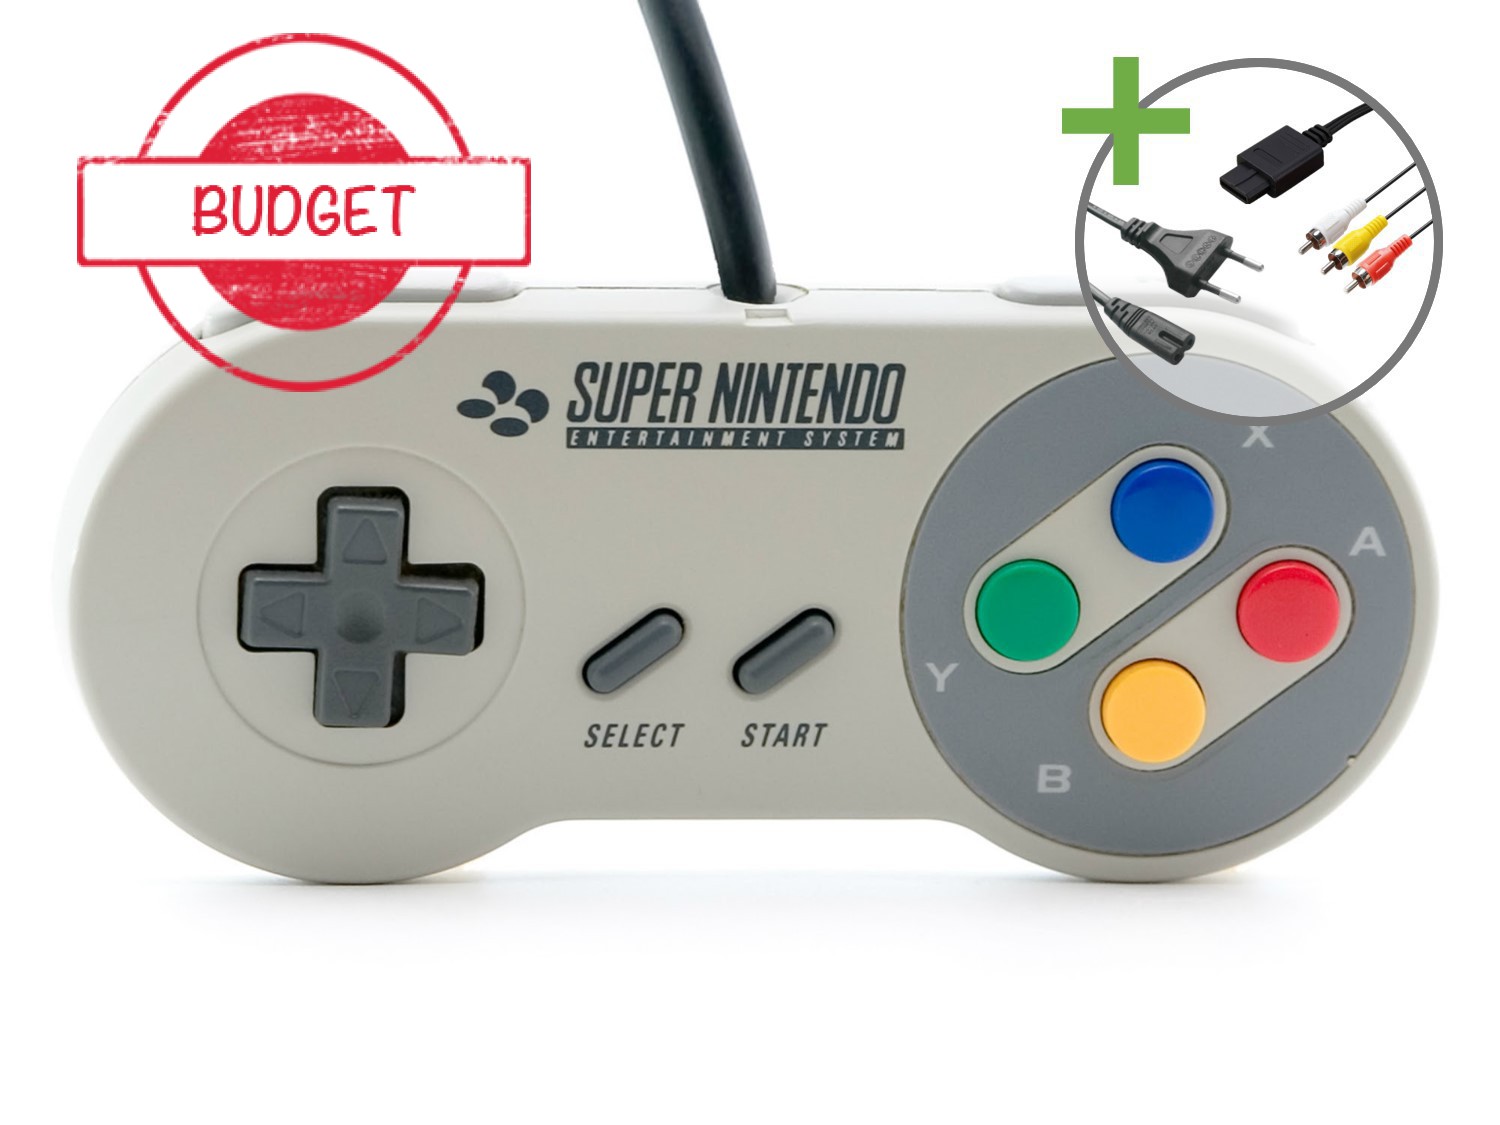 Super Nintendo Starter Pack - Super Mario All Stars Edition - Budget - Super Nintendo Hardware - 3